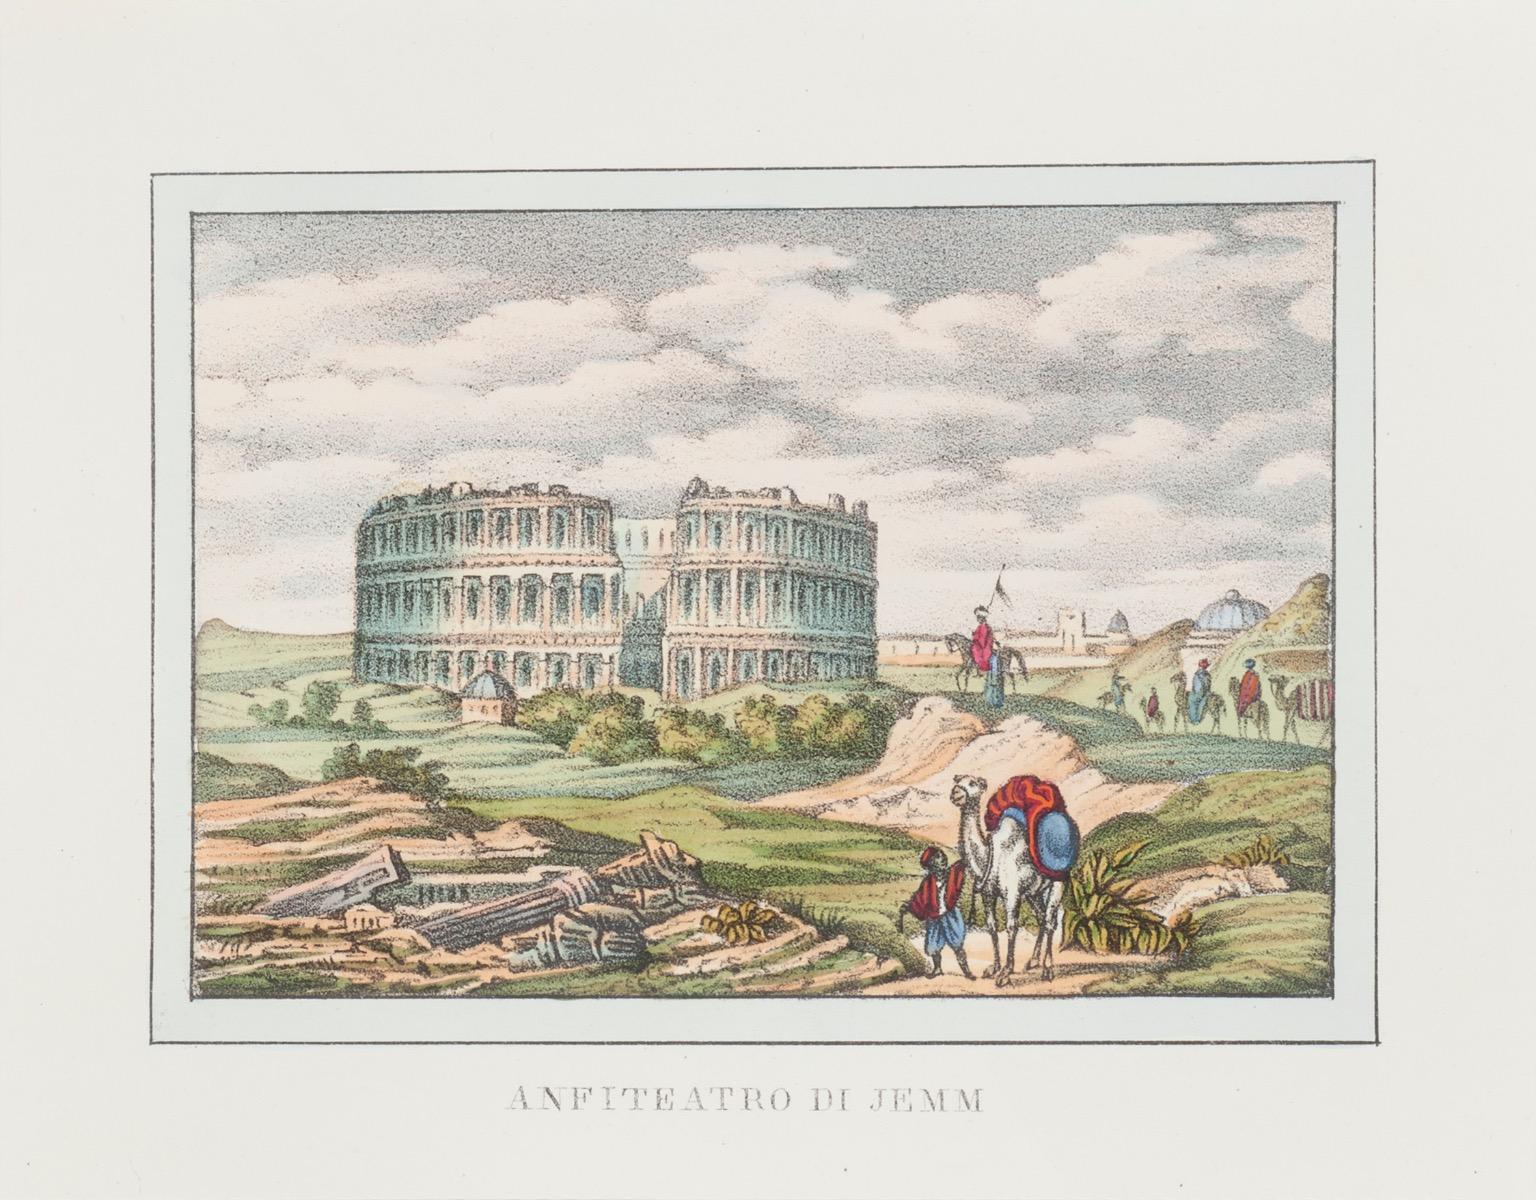 Amphitheater in Jemm - Original Lithograph - 1846